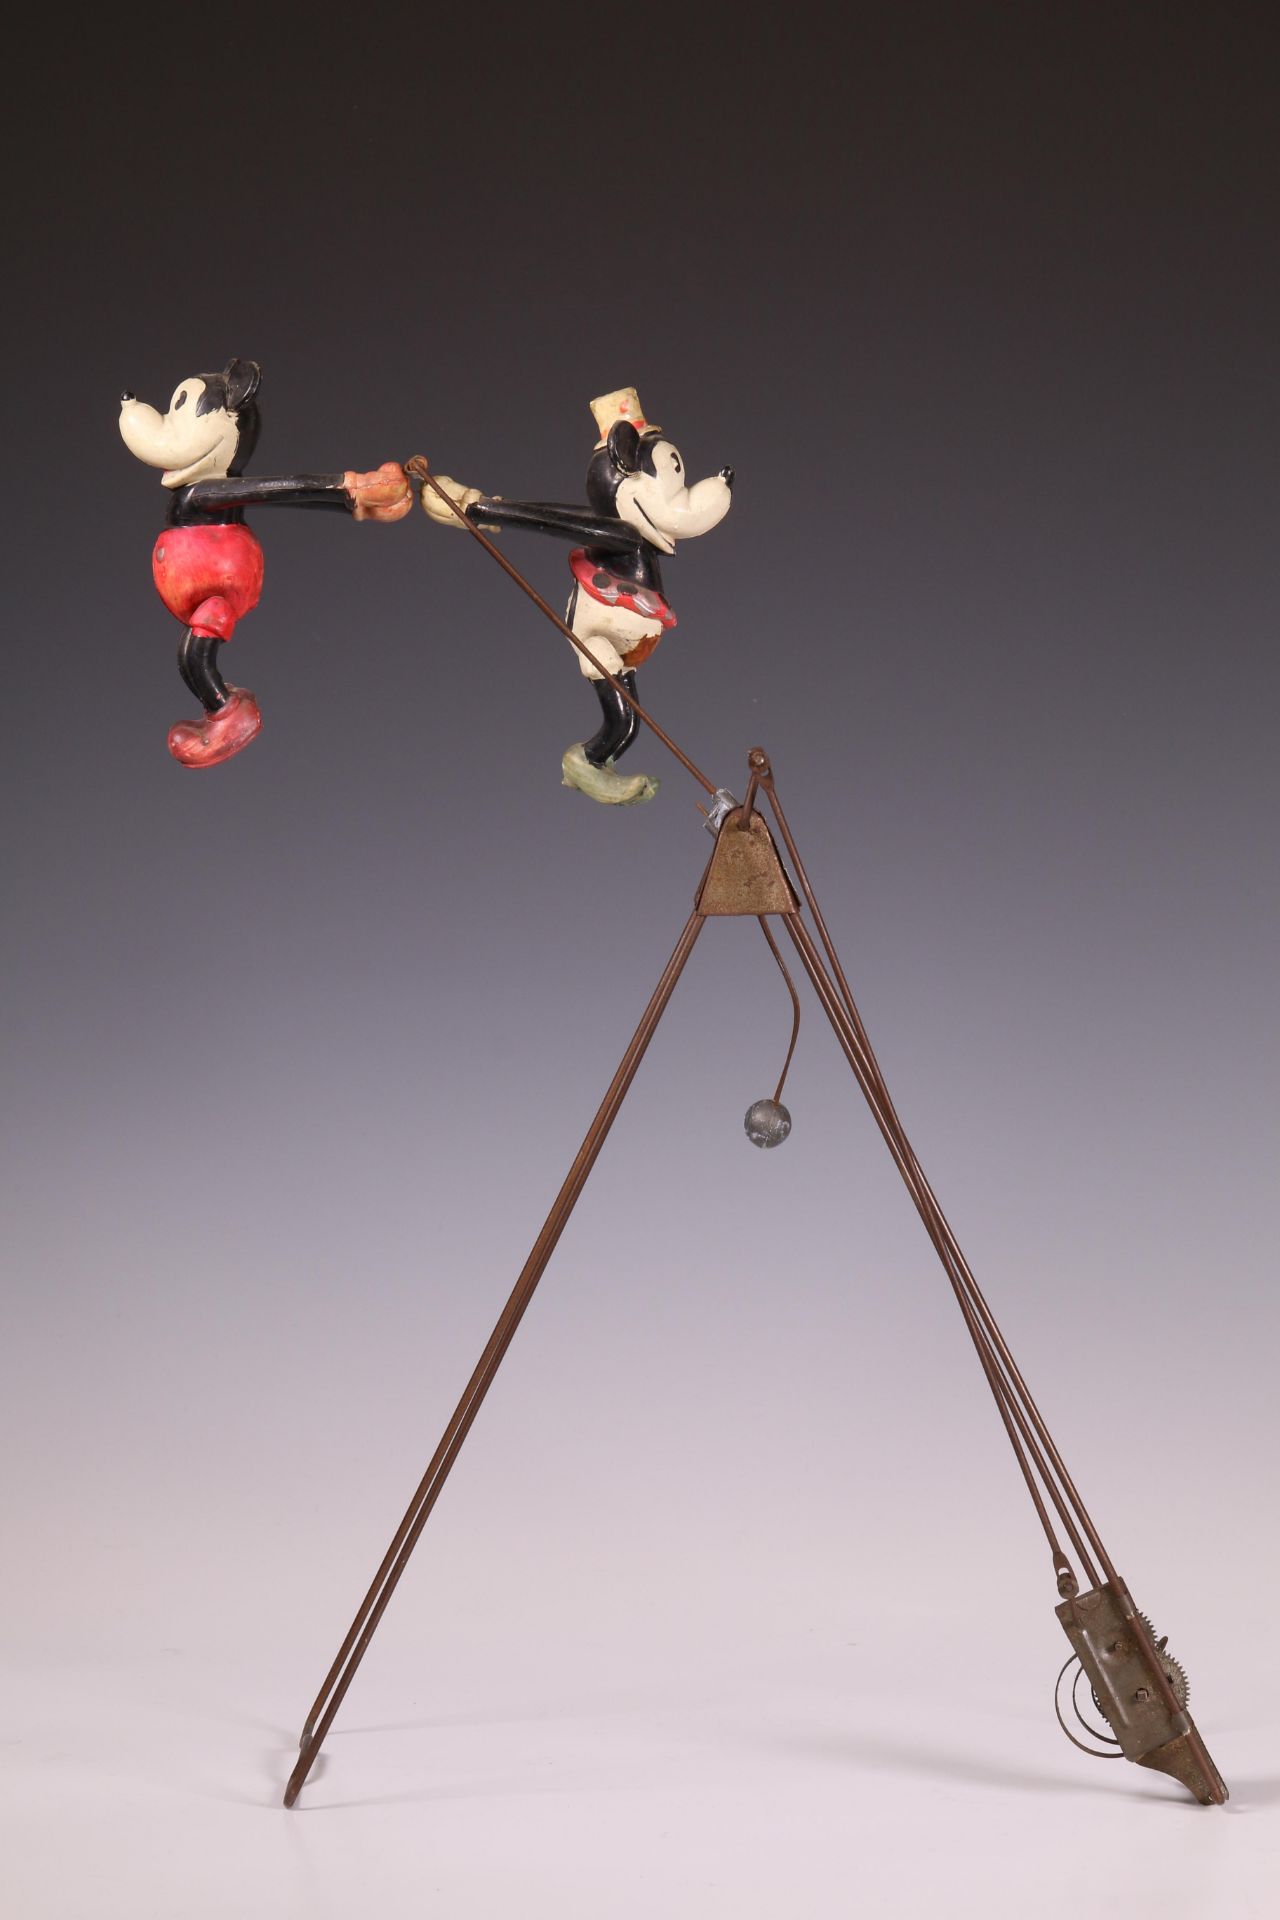 Japan, Mickey en Minnie Mouse in balans, ca. 1930.